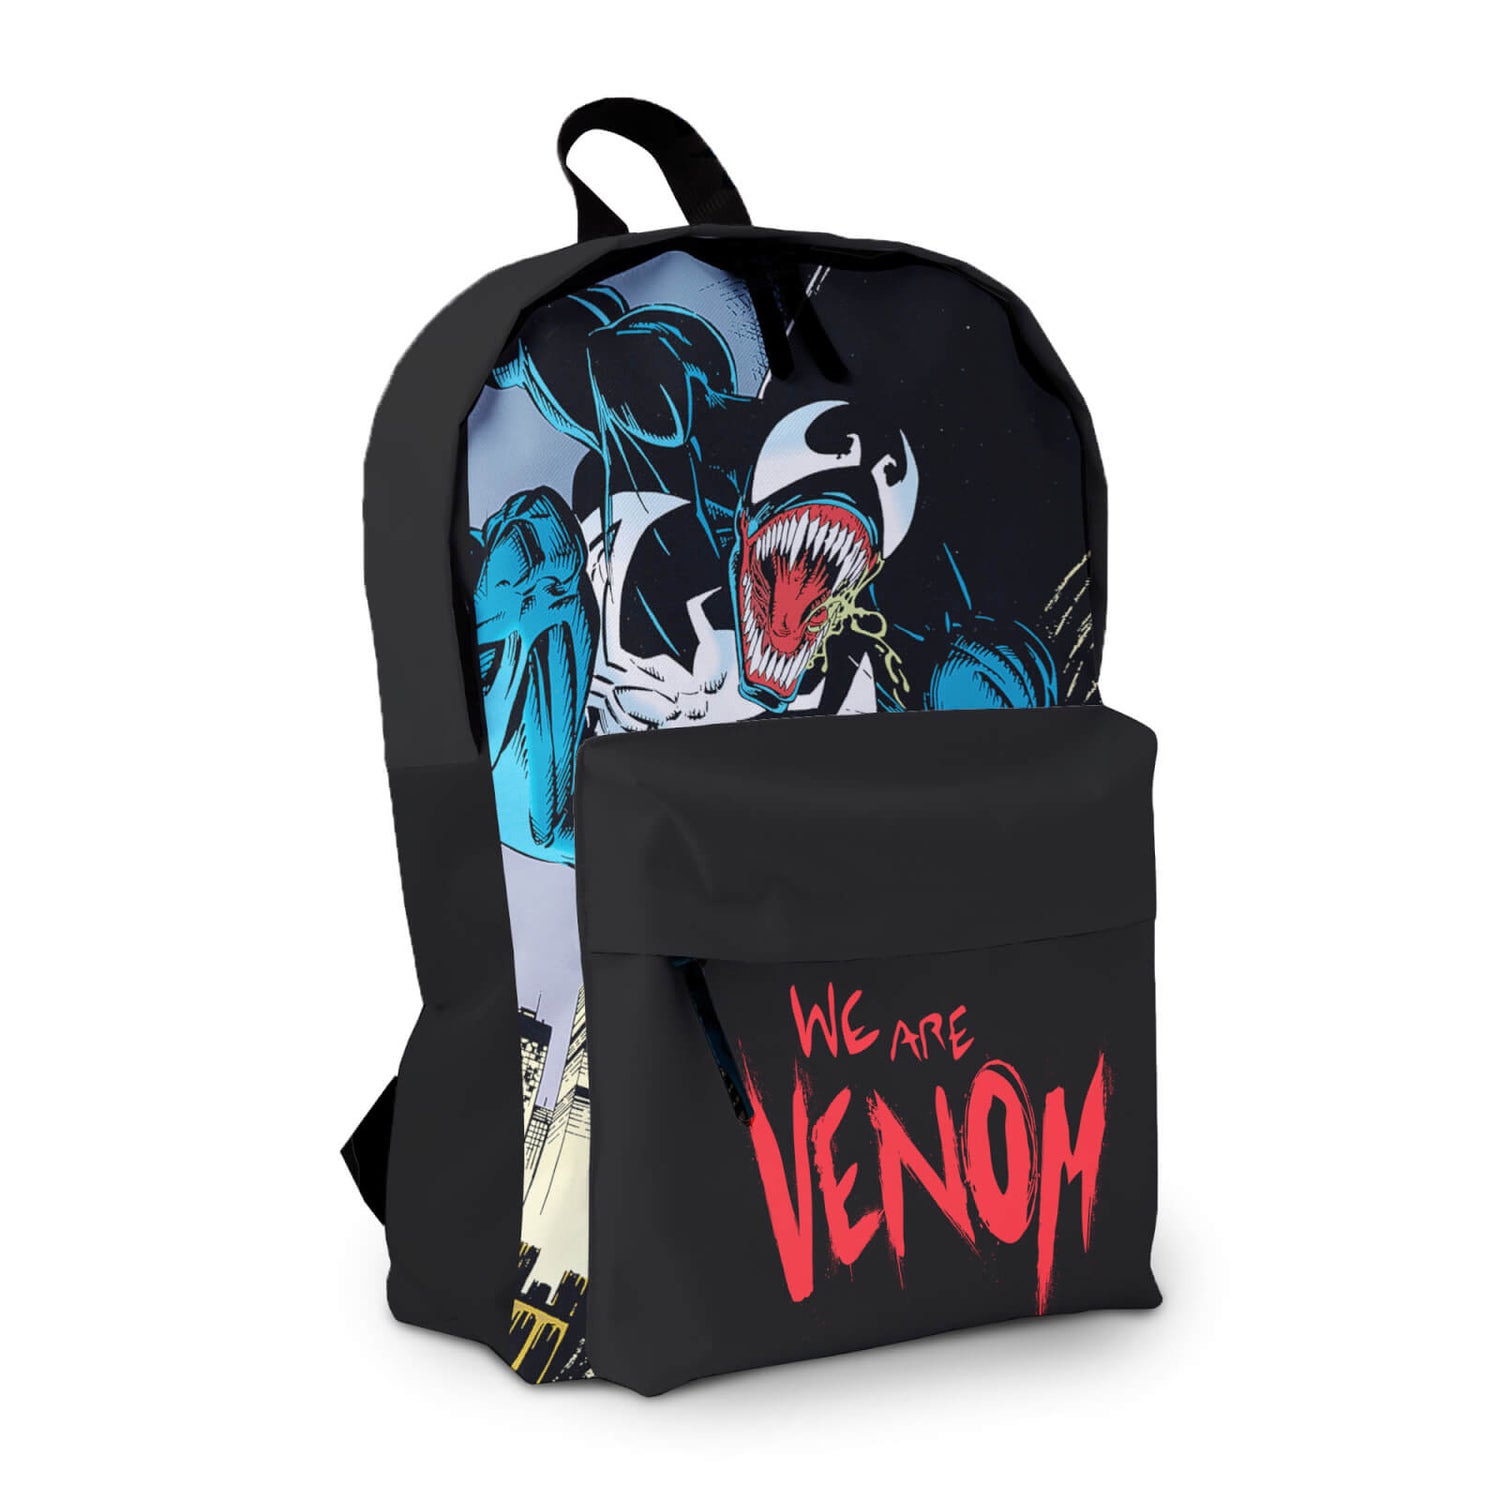 AKEDO X Venom Backpack